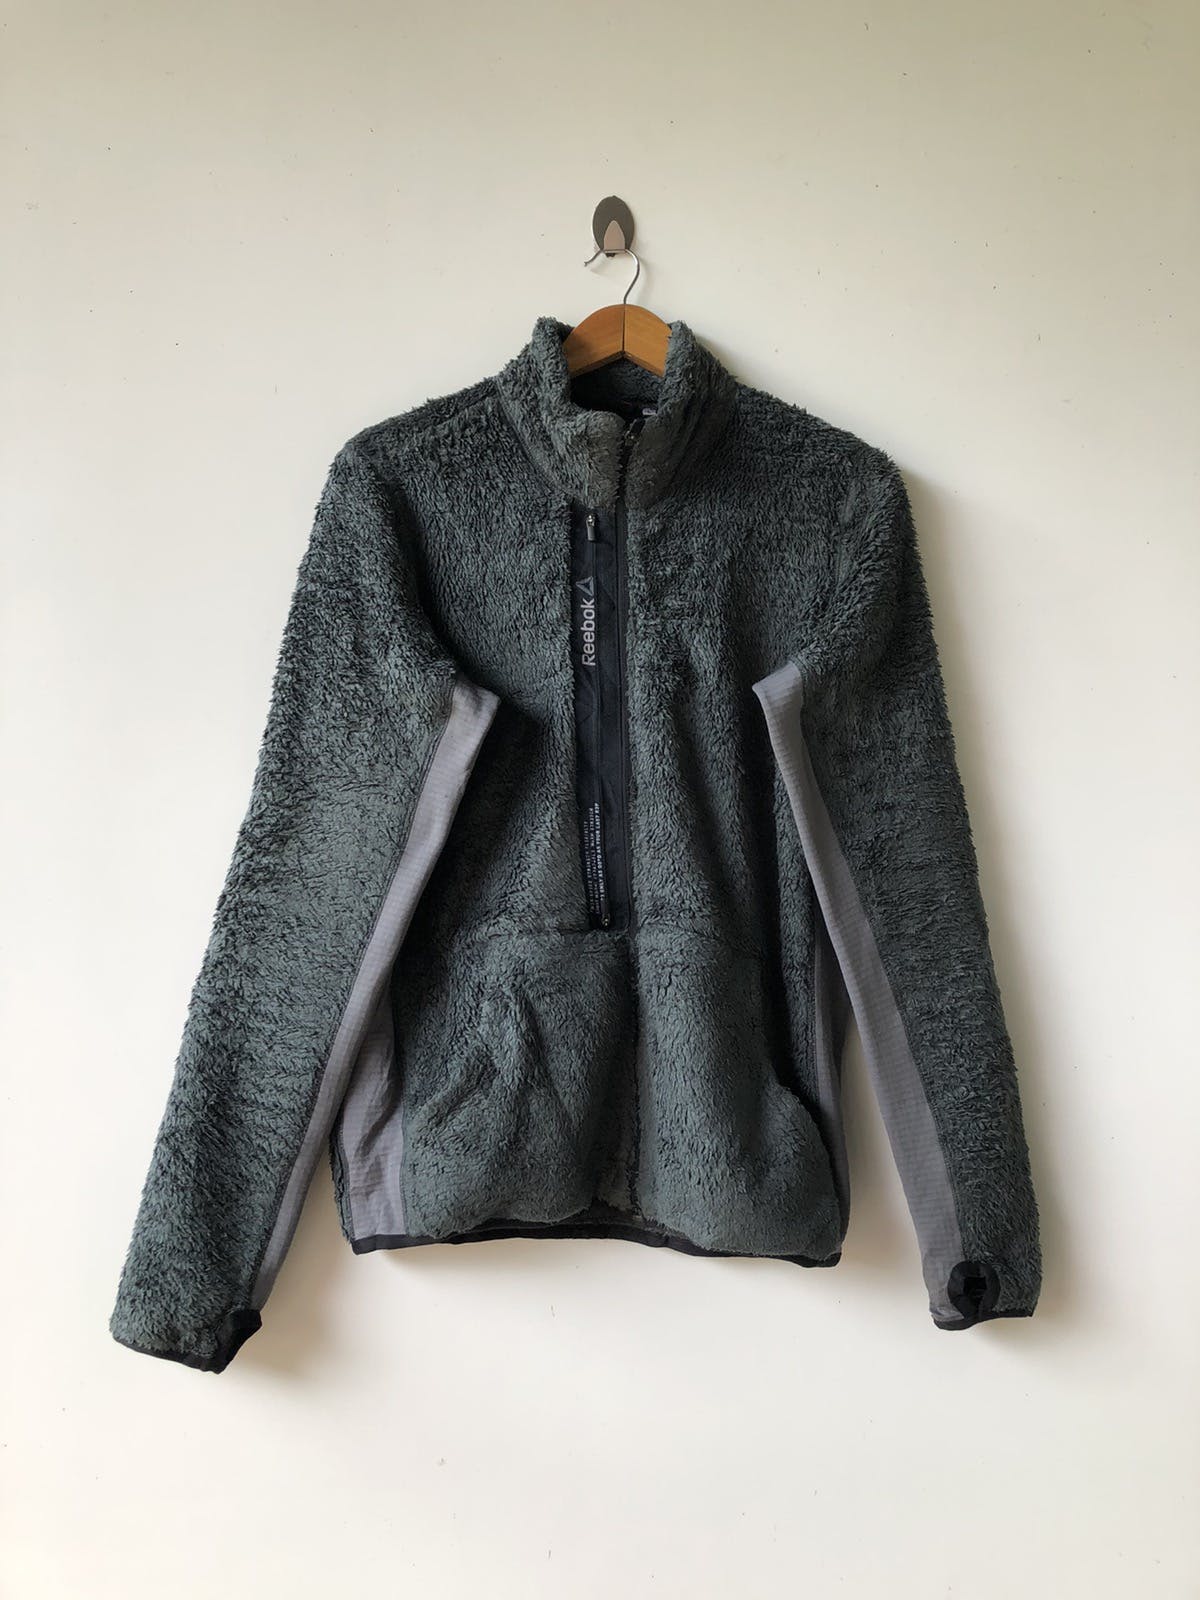 Vintage Reebok fleece Pullover jackets - 1